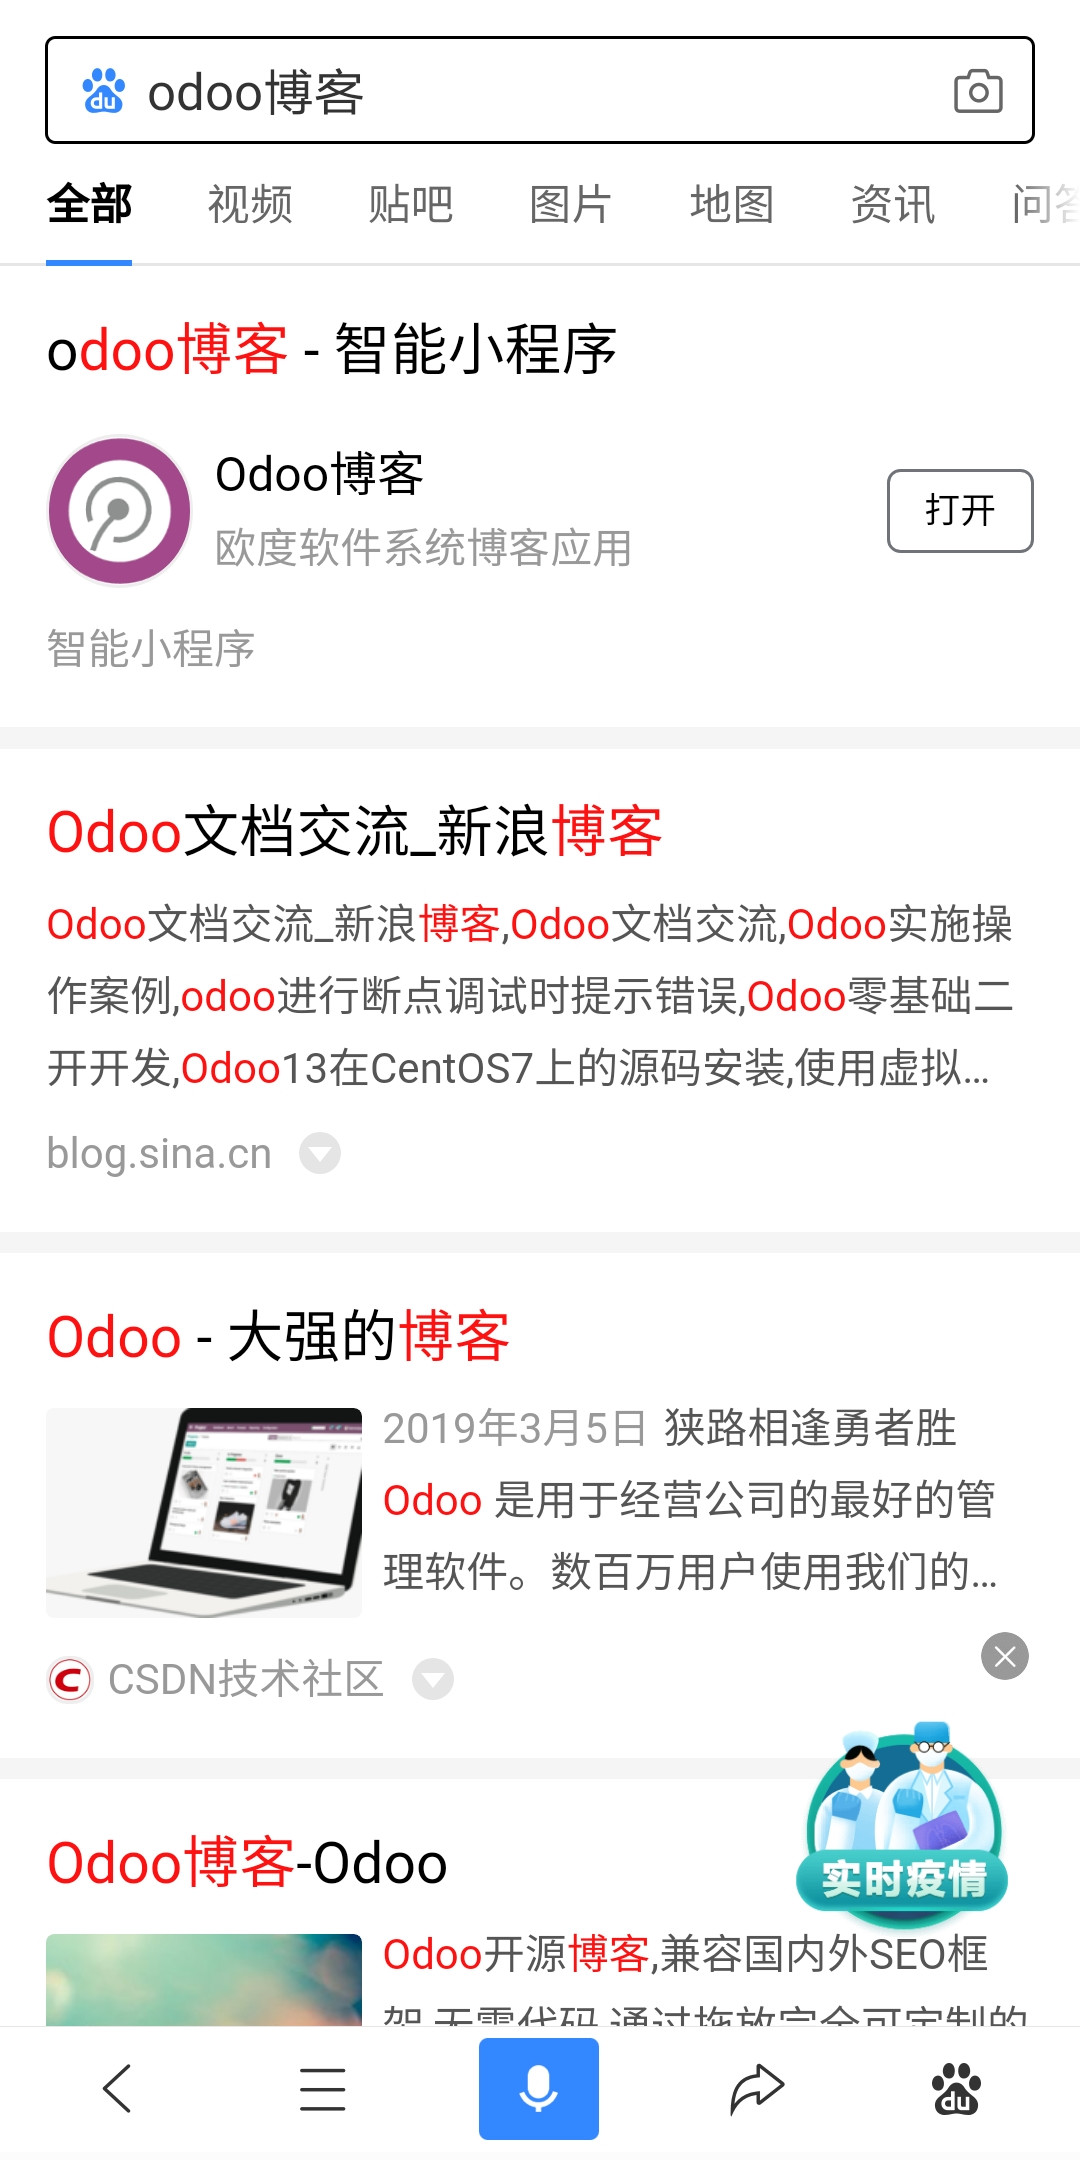 Odoo博客百度智能小程序分发体验